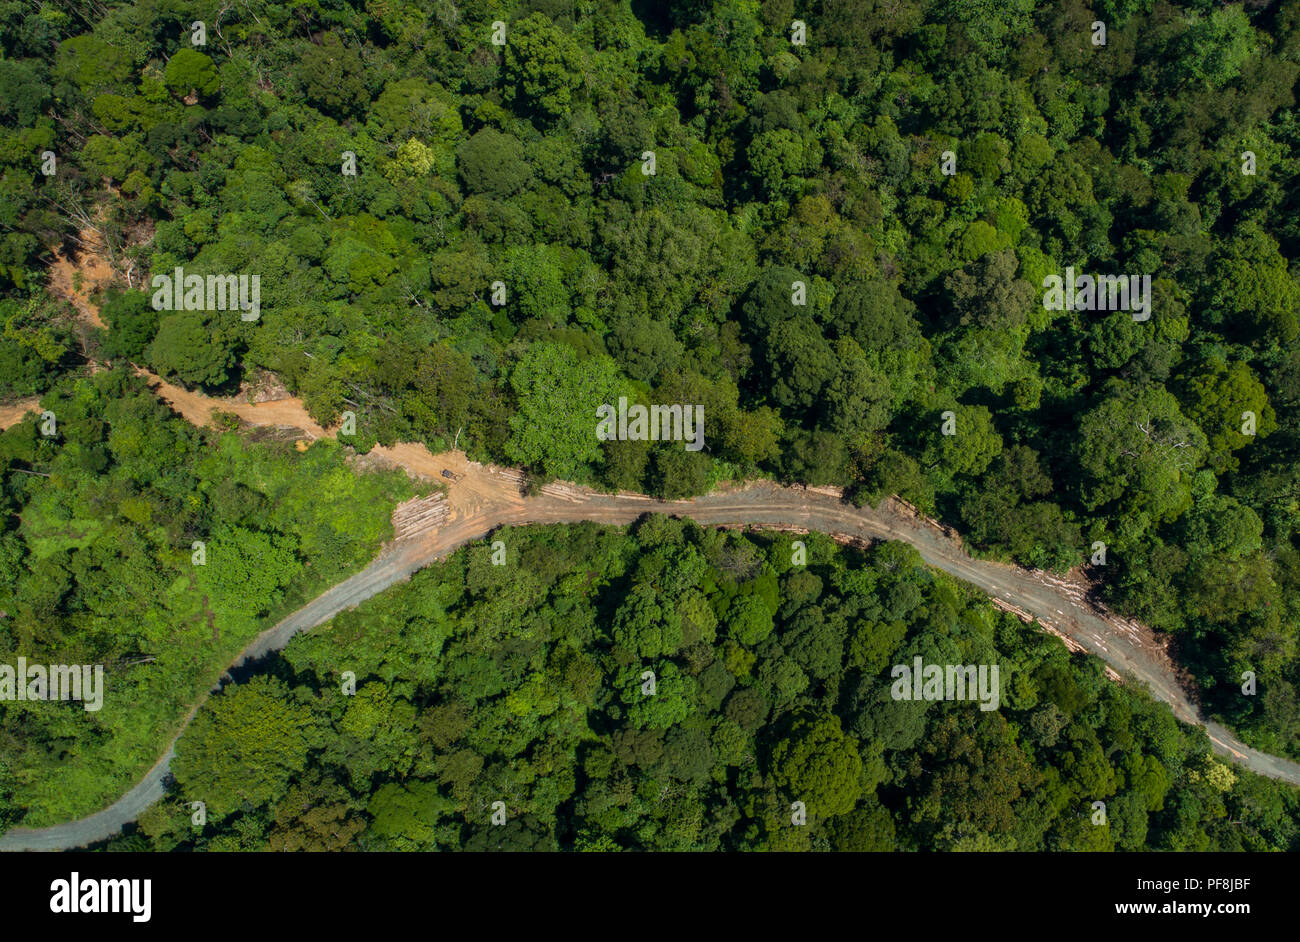 A commercial logging road through Deramakot Forest Reserve, Sabah, Malaysian Borneo Stock Photo